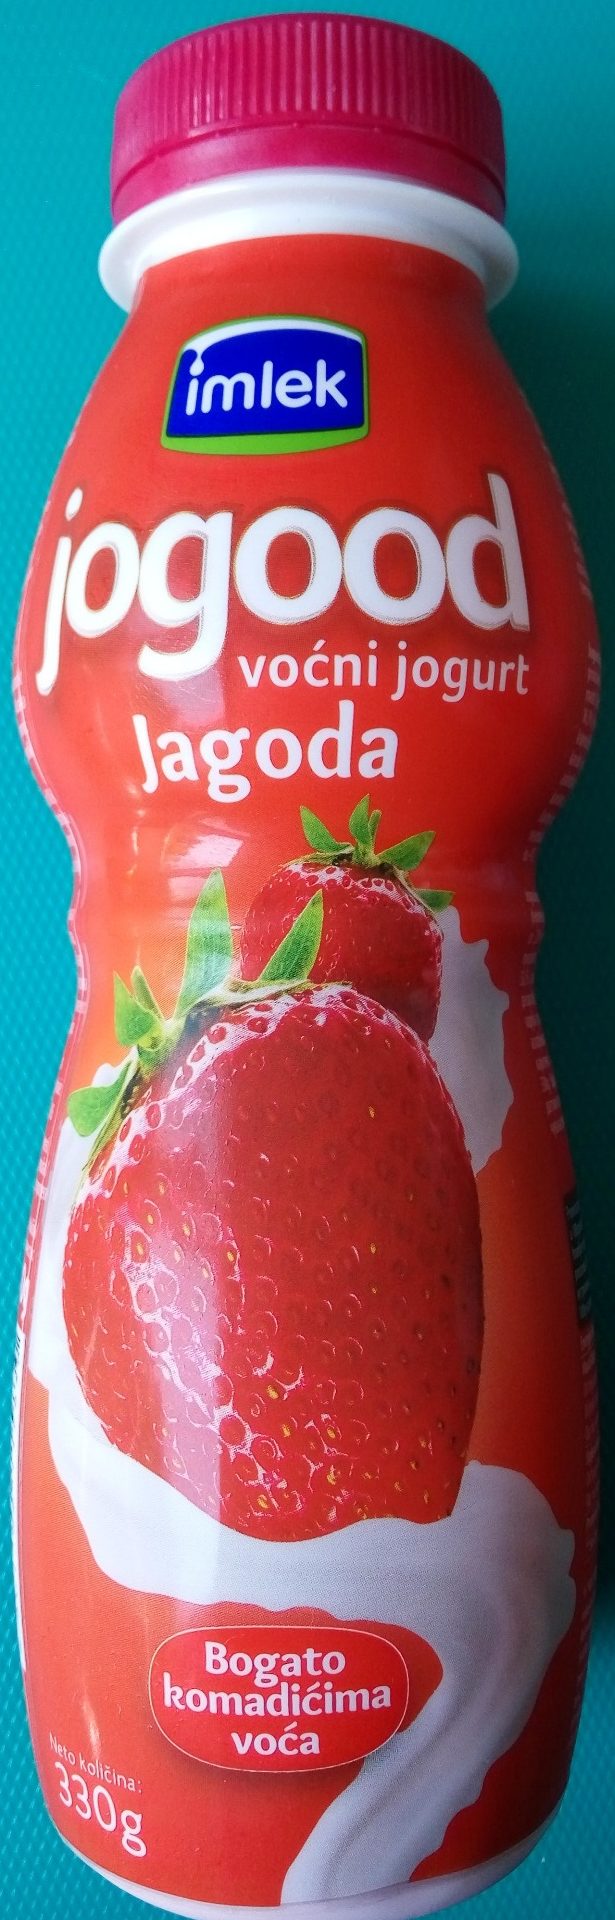 Jogood voćni jogurt - jagoda - Produit - sr